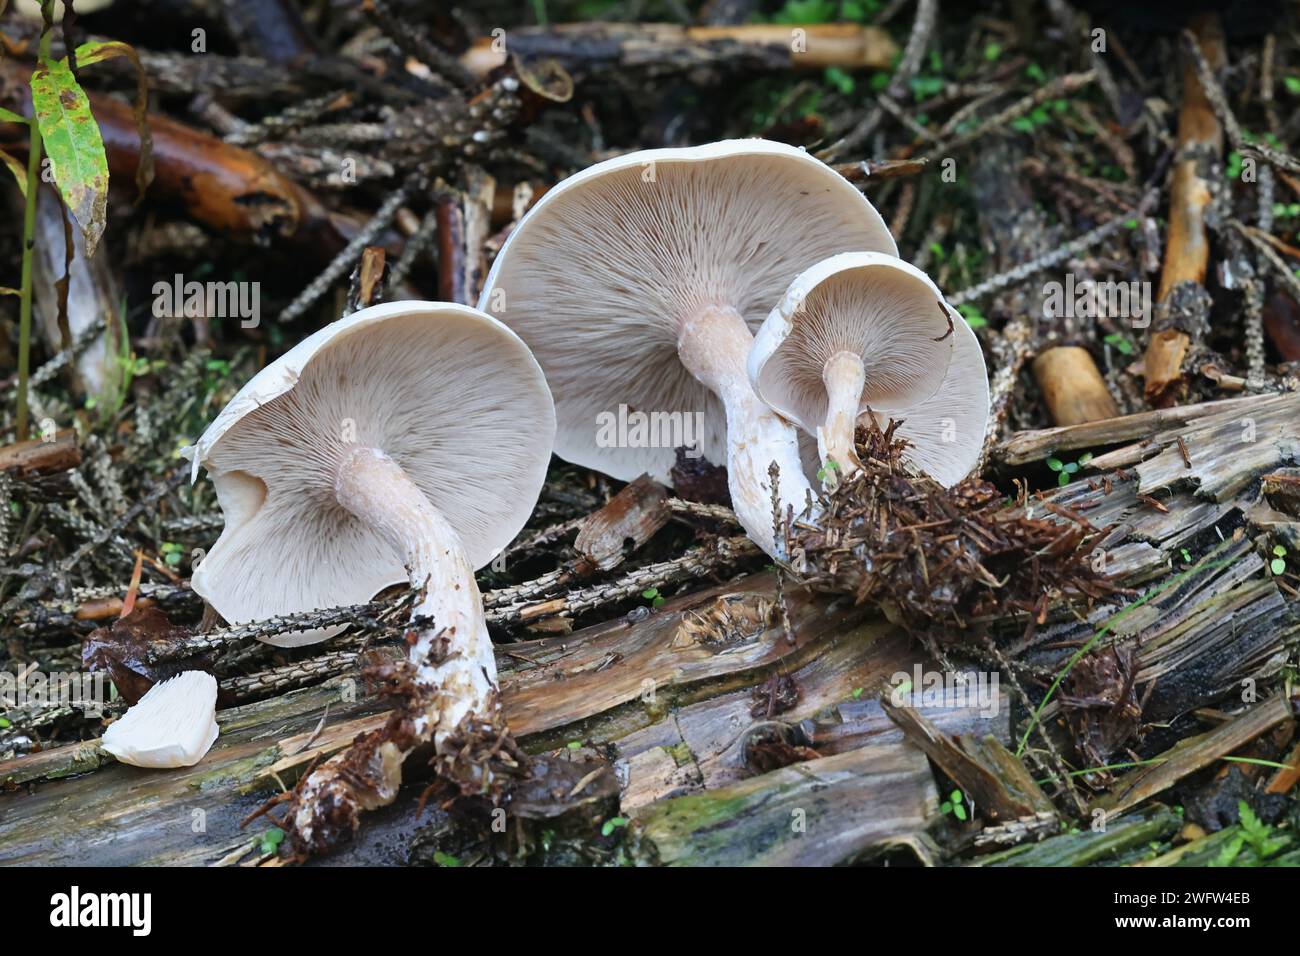 Lepista densifolia, also called Clitocybe densifolia, wild funnel cap mushroom from Finland, no common English name Stock Photo